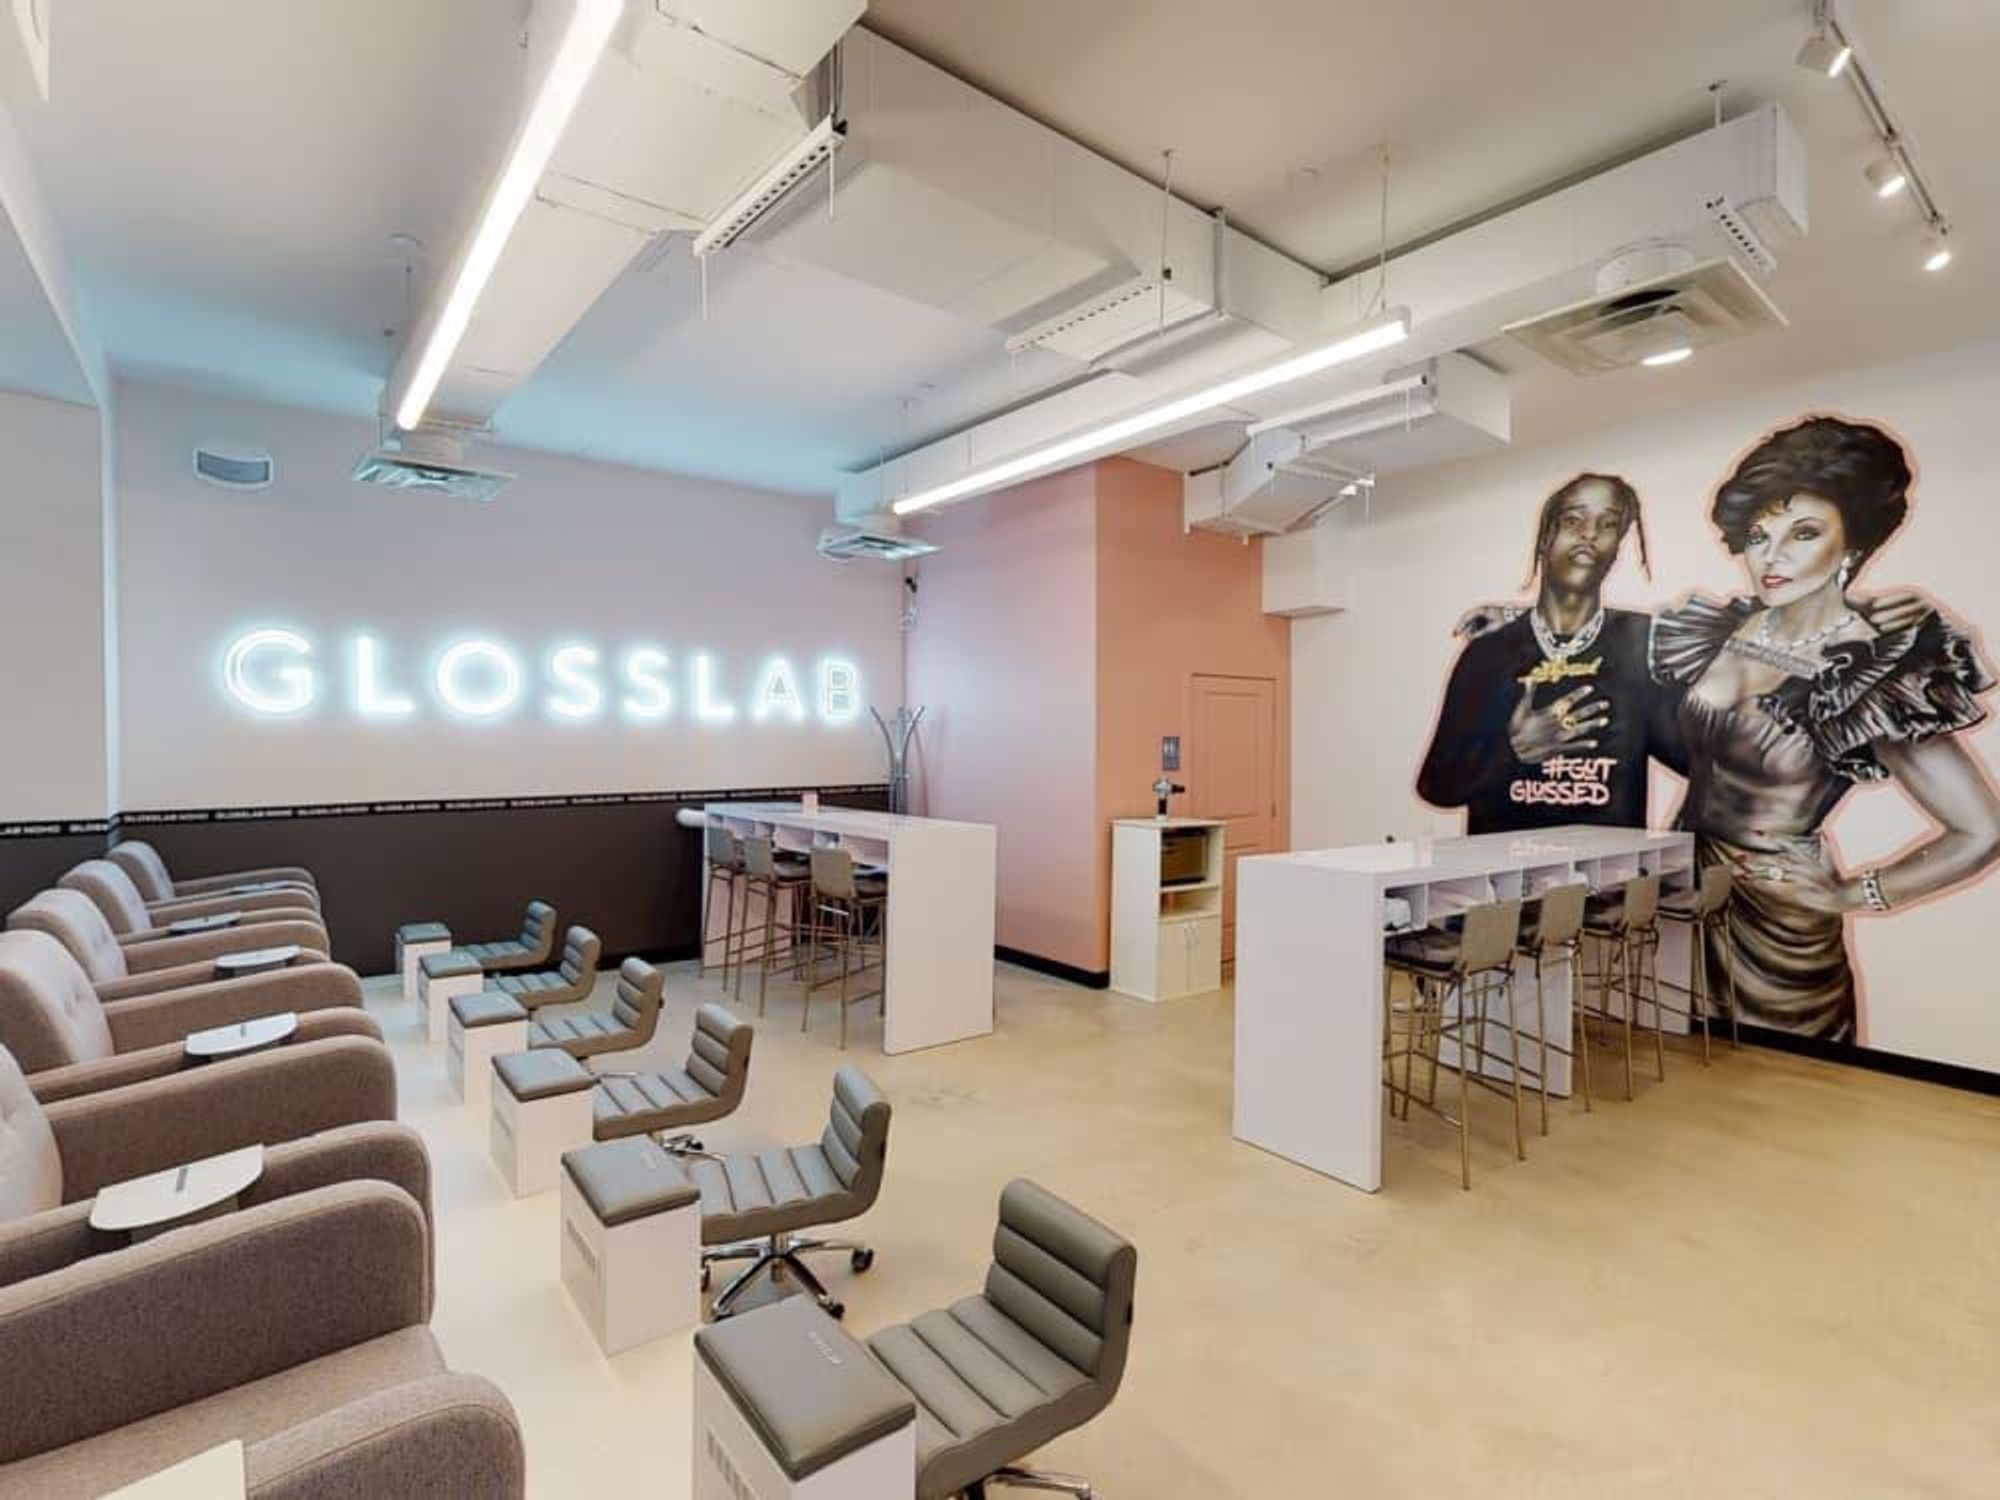 Glosslab nail studio